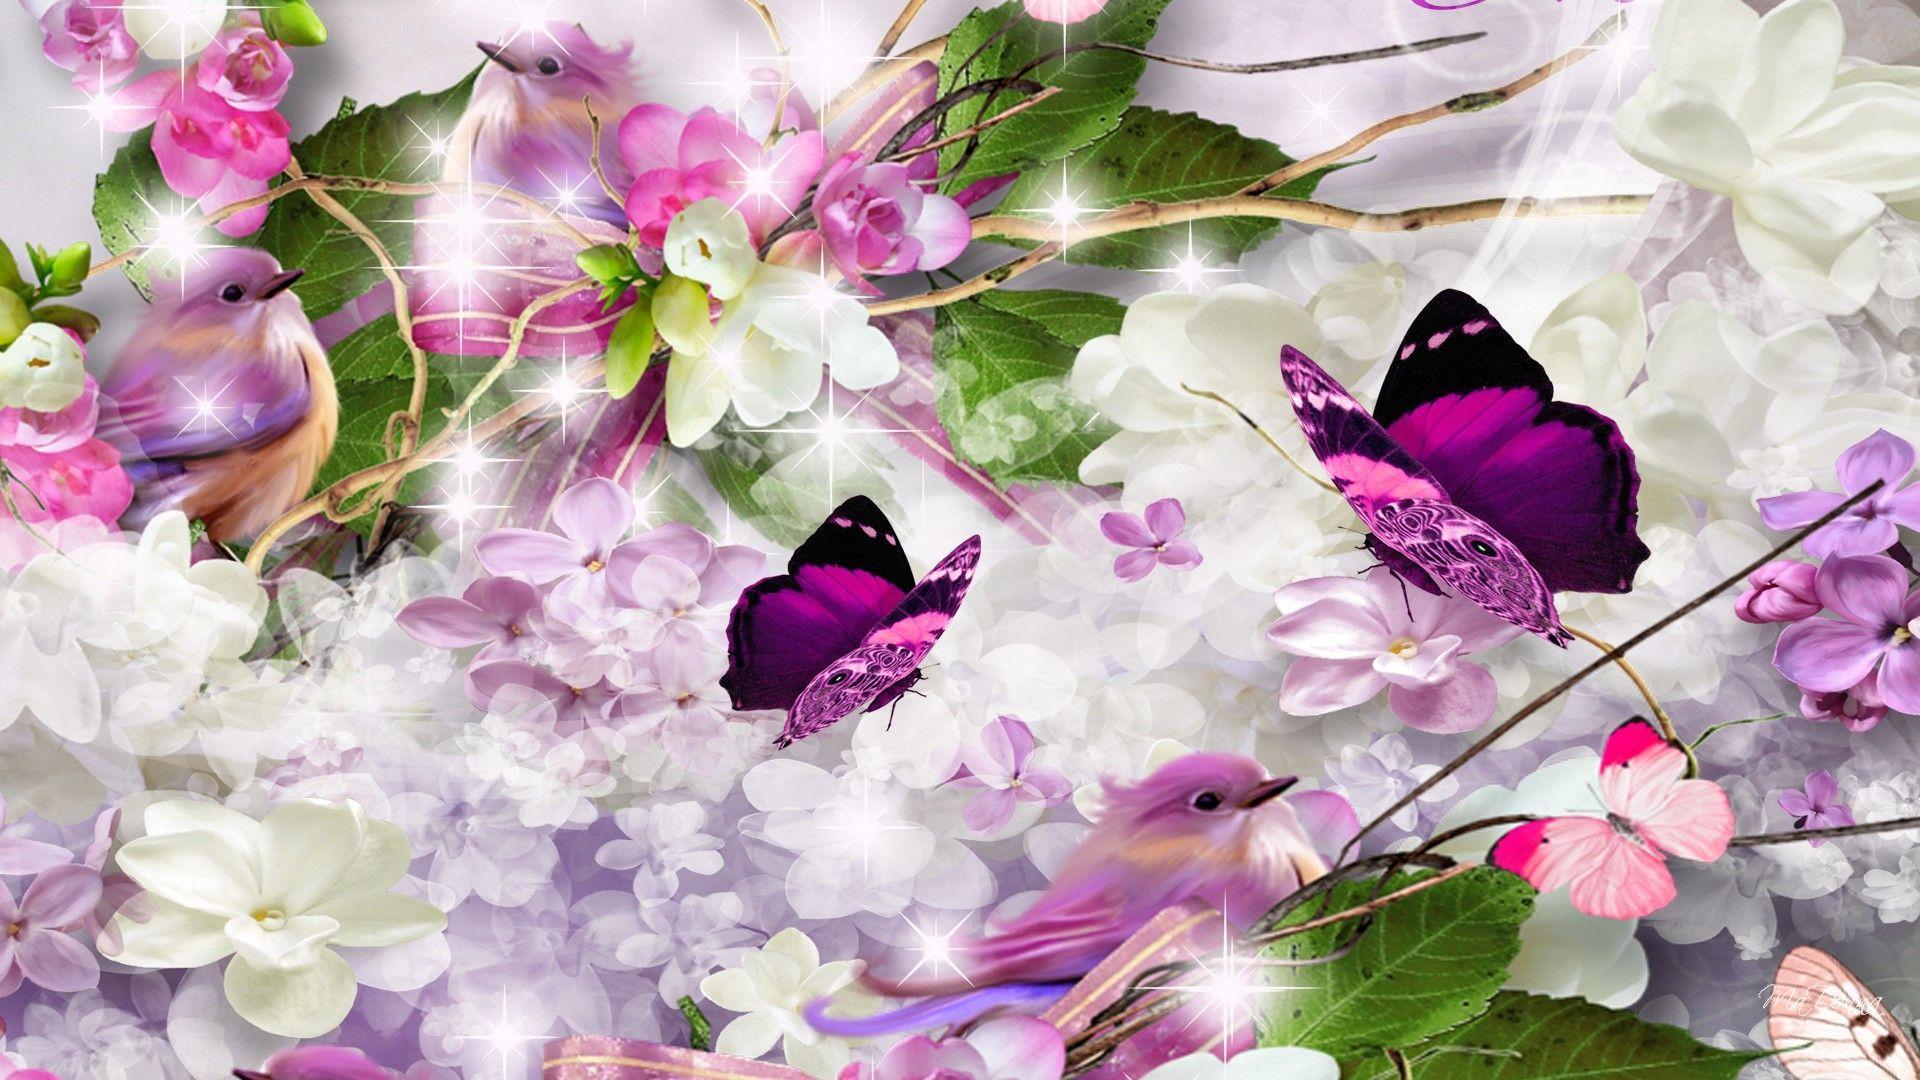 Frangipani Lilacs Wallpaper. For the Love of Lilacs